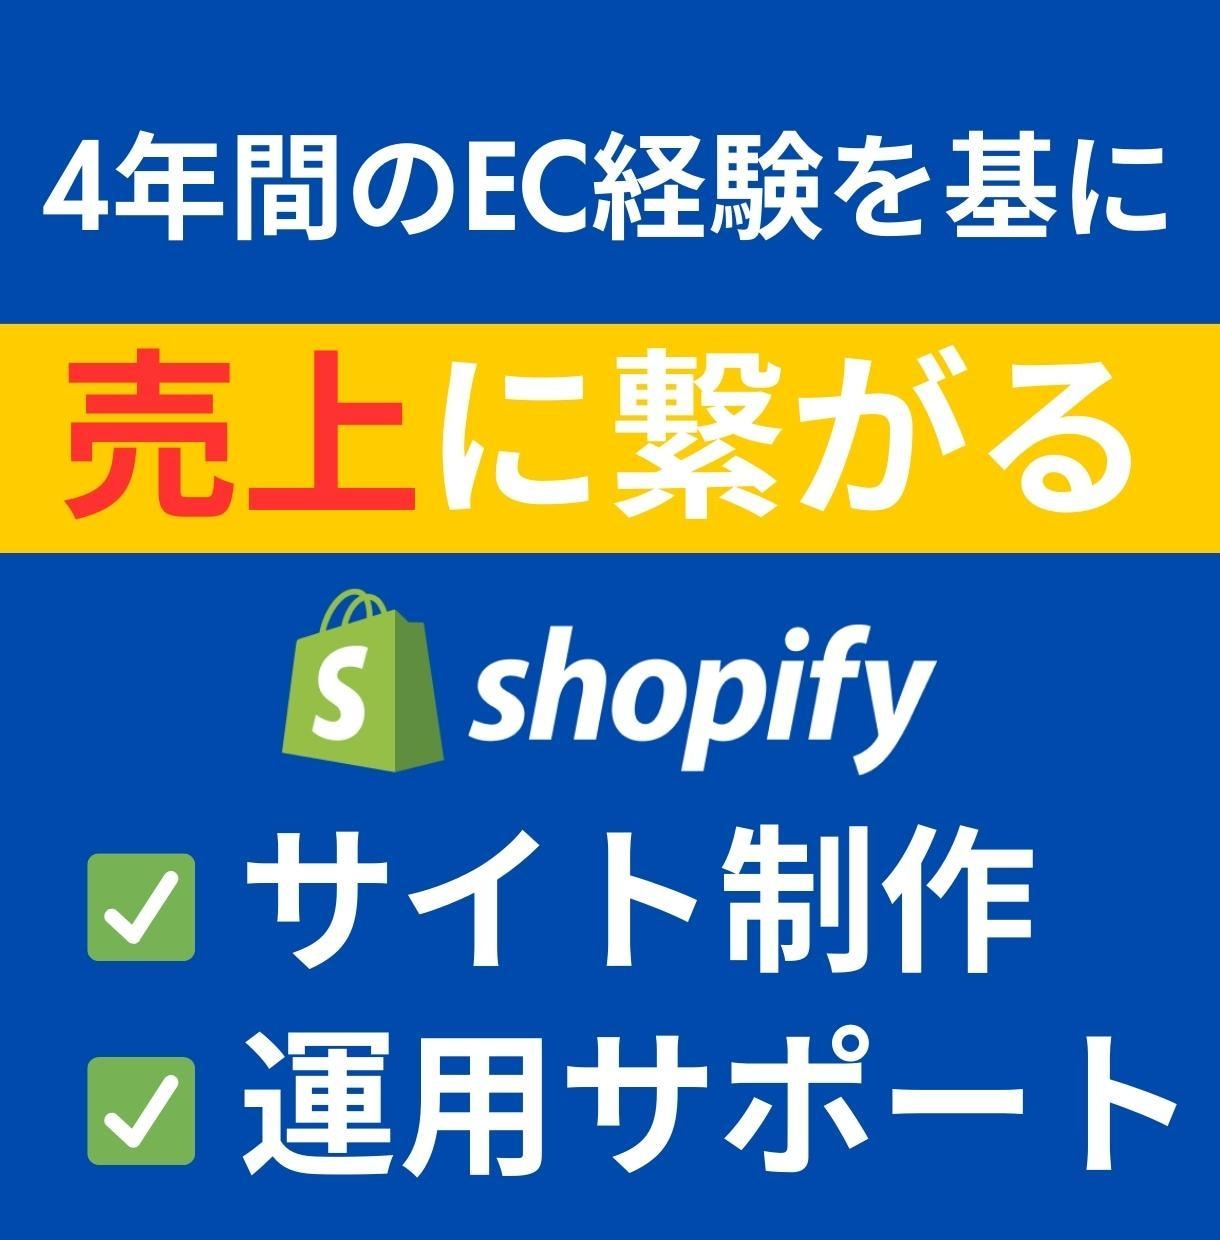 Shopify構築/EC経験4年のプロが制作します 格安Shopify制作代行 / 1ヶ月の運用サポート付き イメージ1